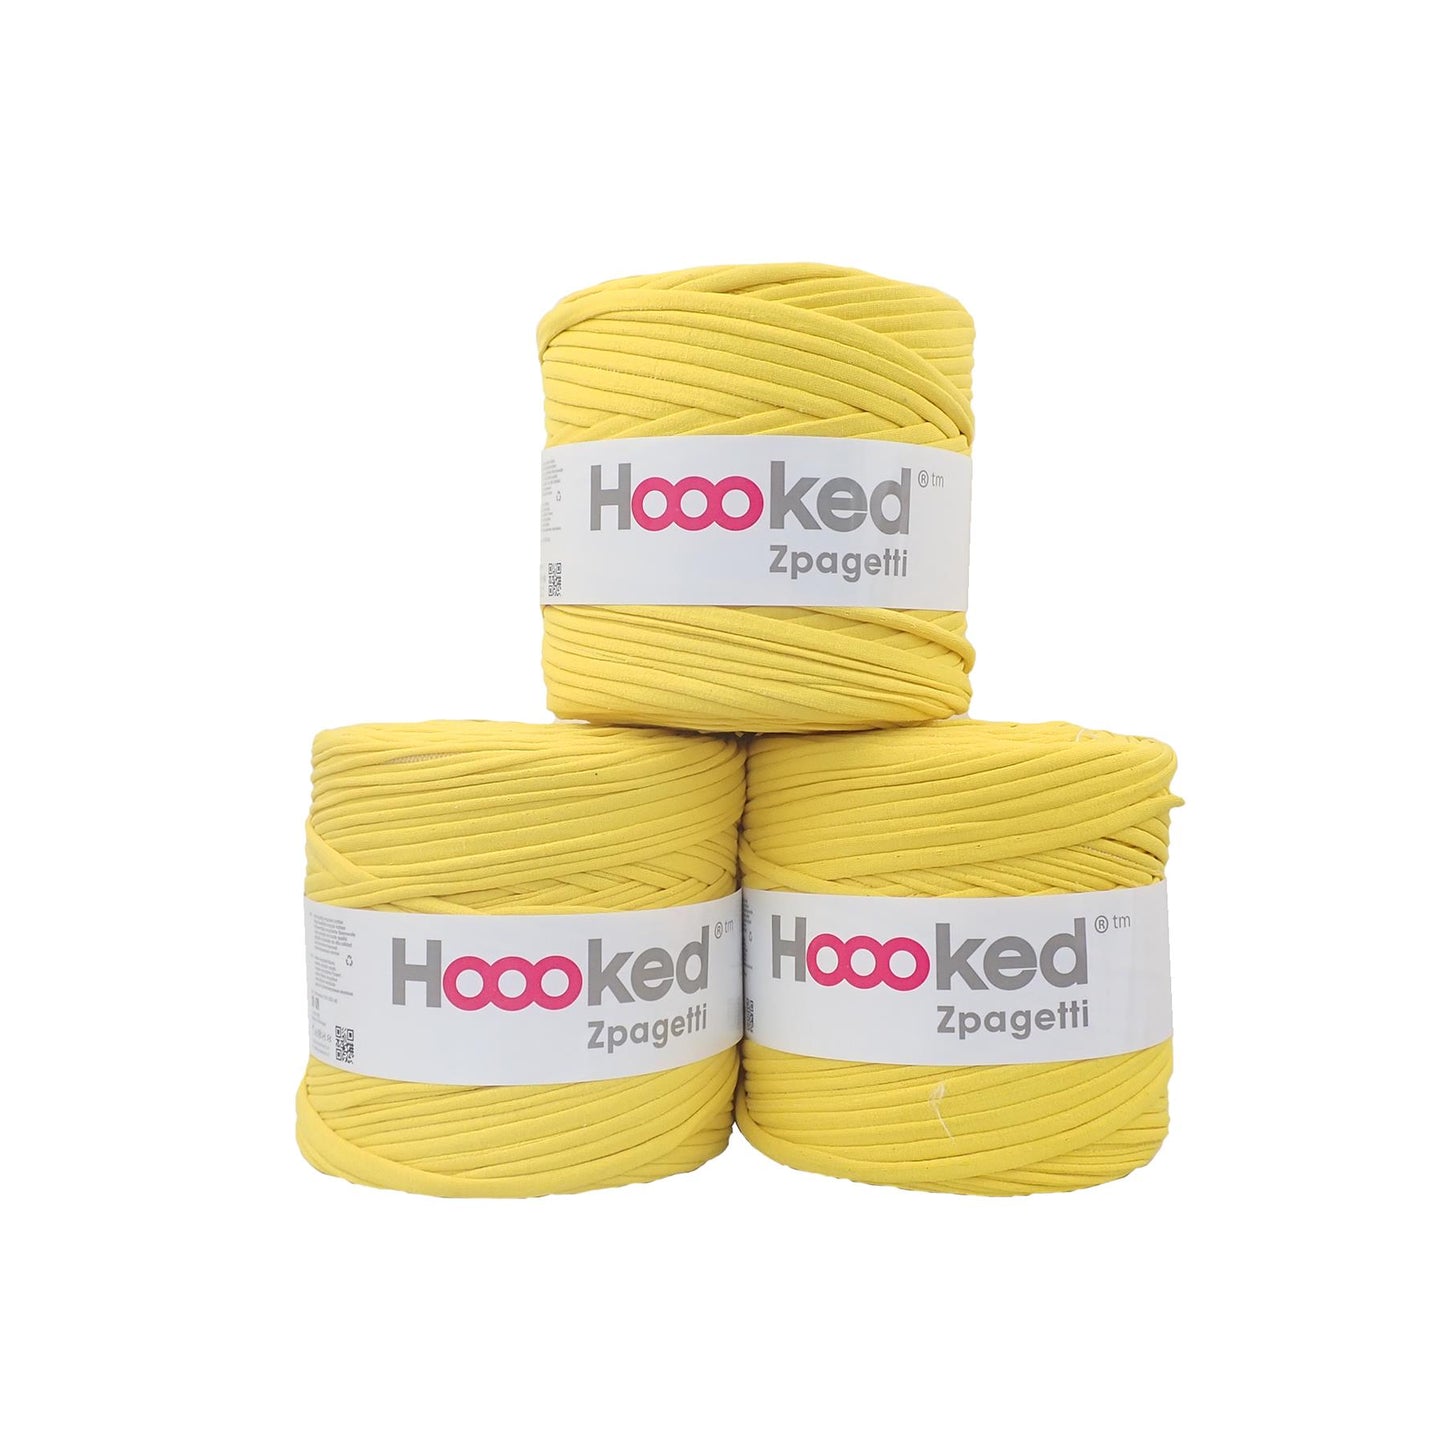 Hoooked Zpagetti Sunflower Yellow Cotton T-Shirt Yarn - 120M 700g (Pack of 3)